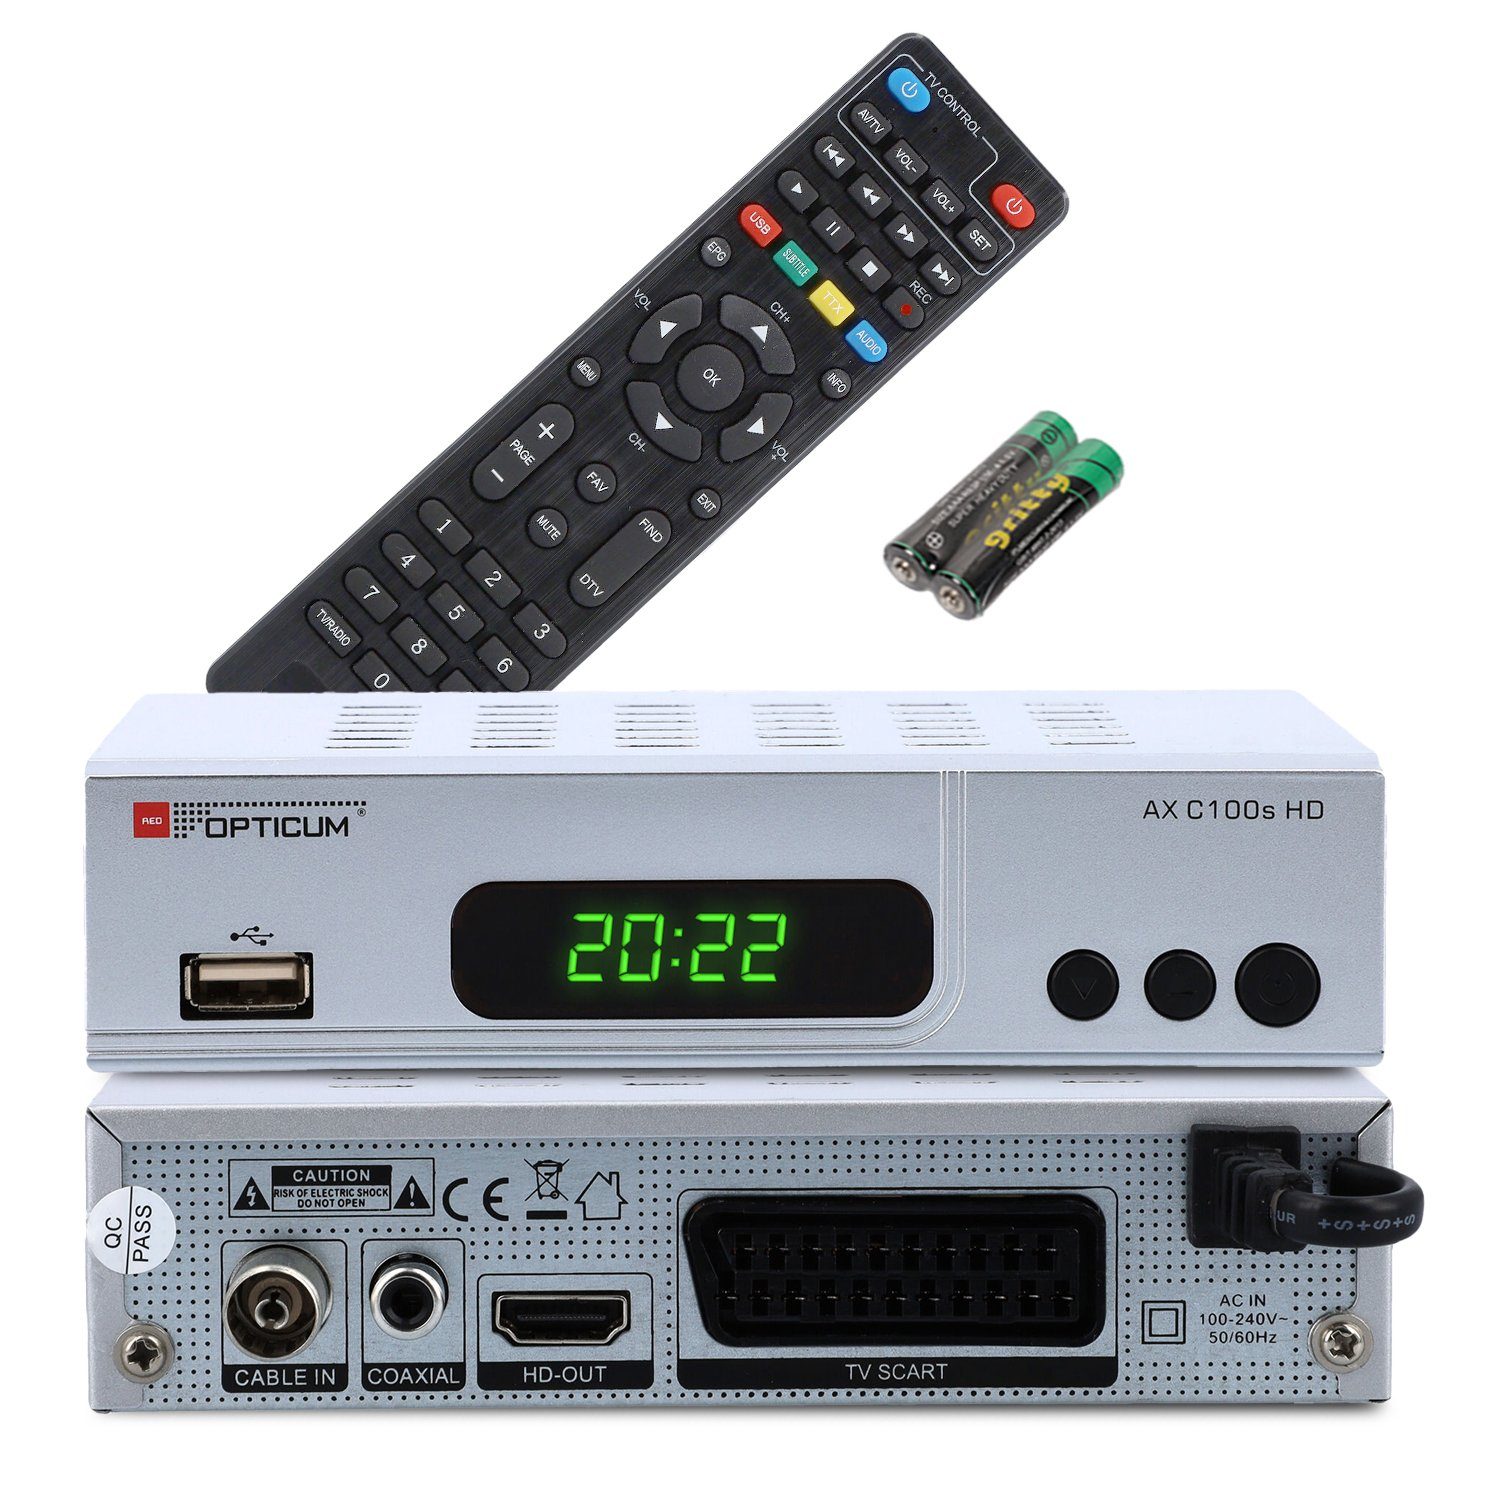 RED OPTICUM AX C100 silber Full HD DVB-C Receiver mit